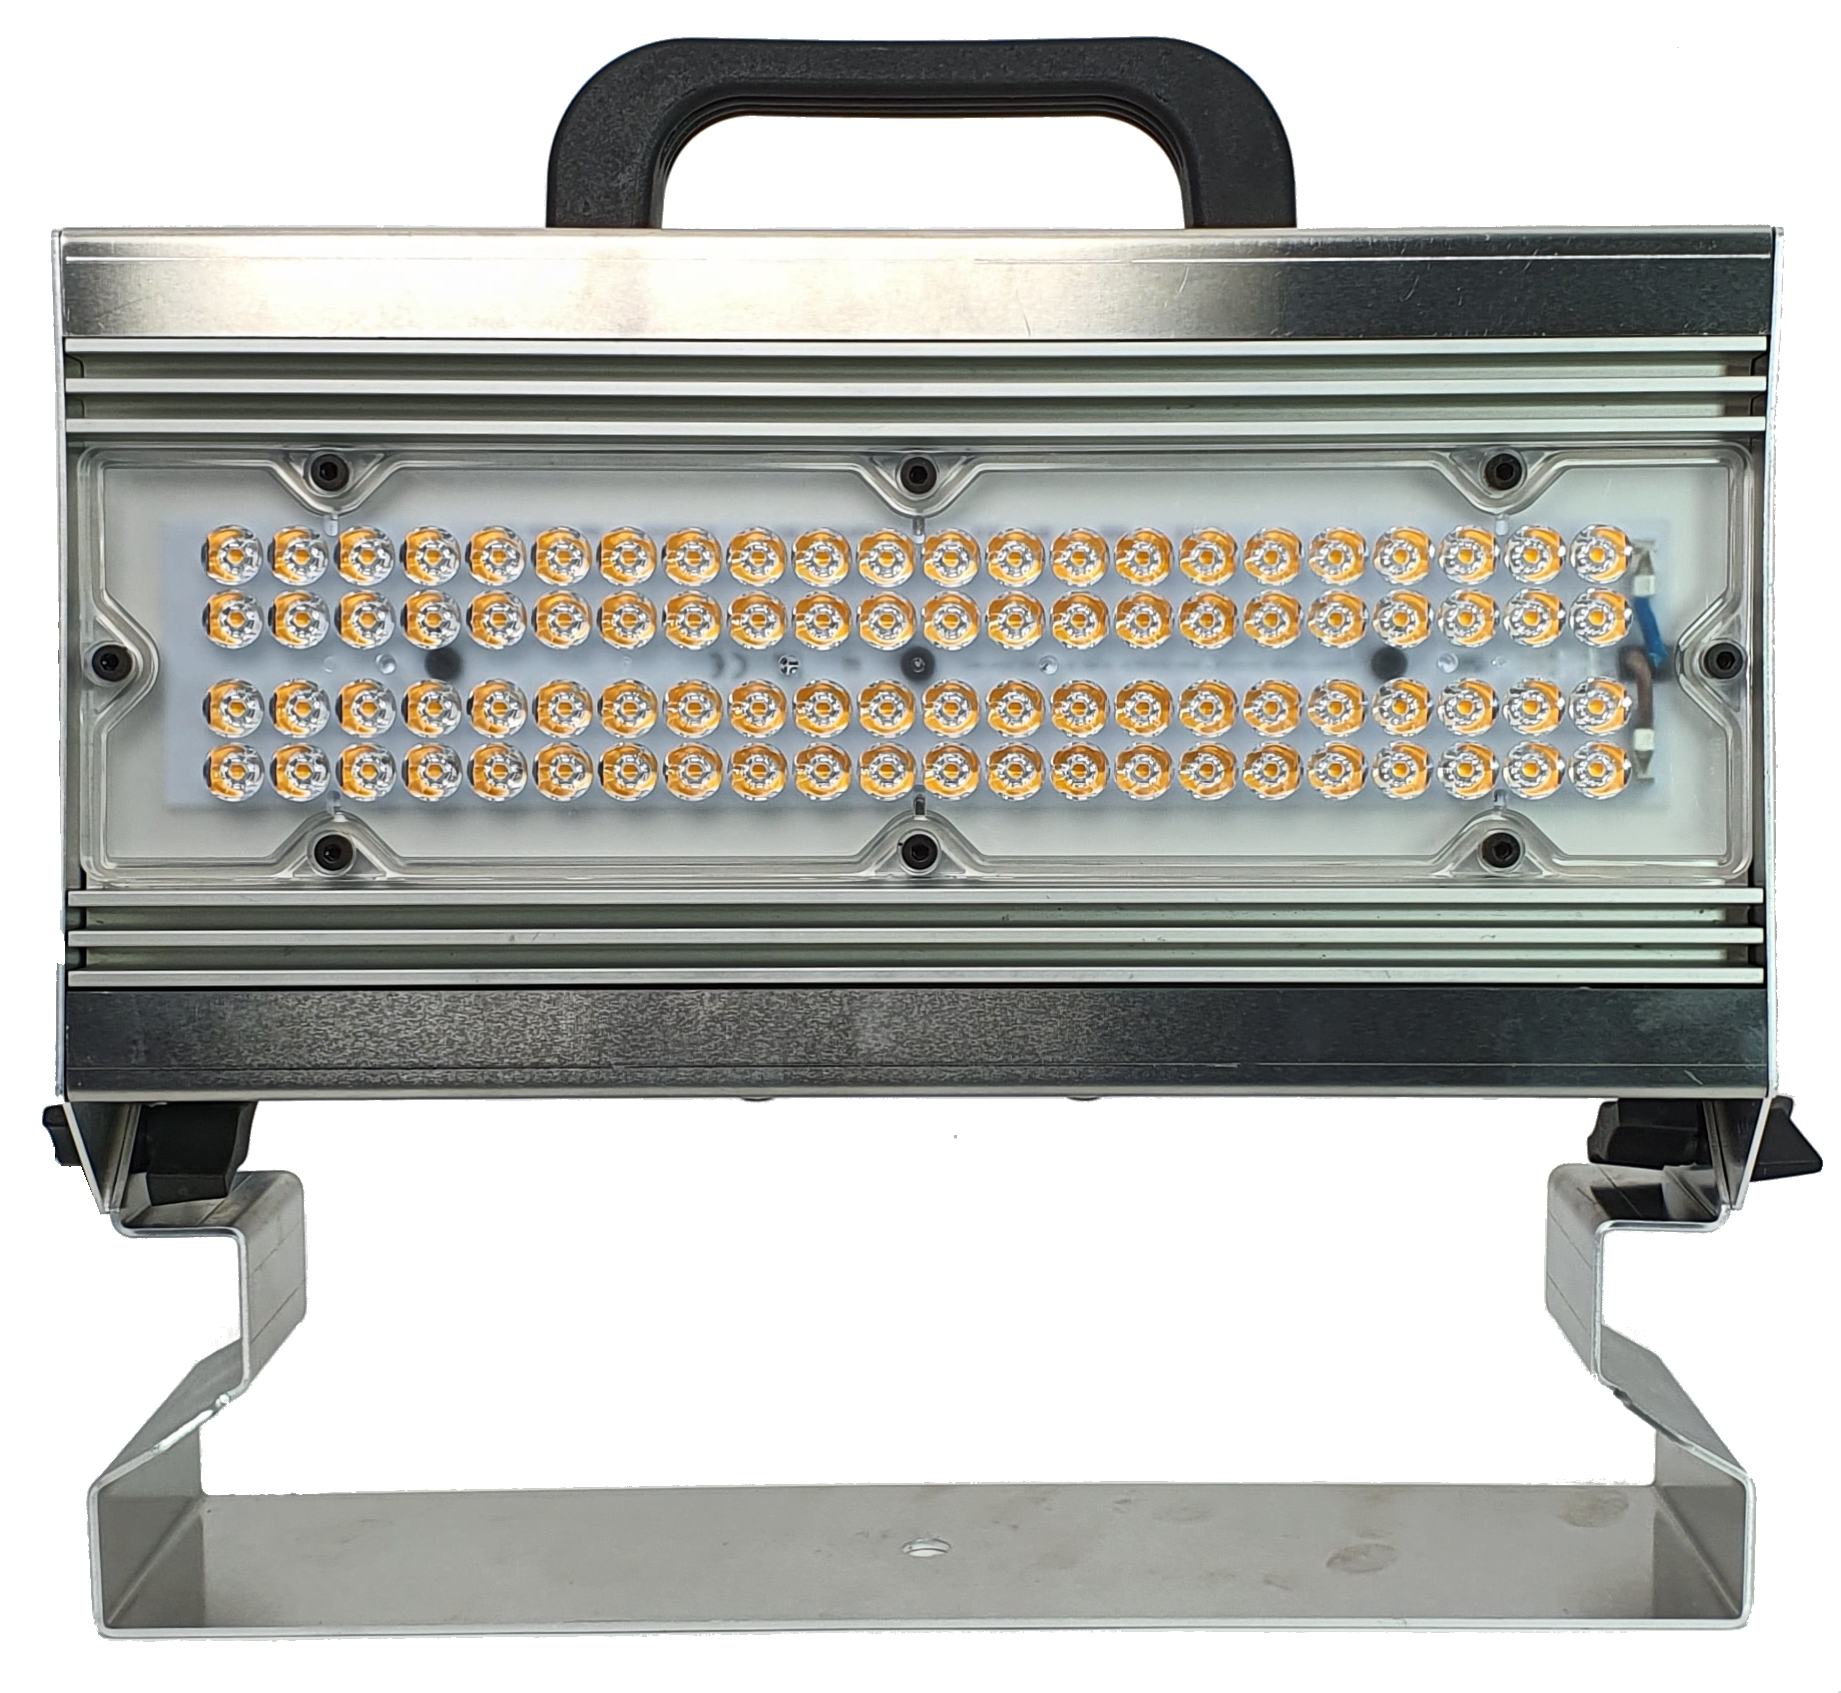 Work spotlight 90 - IP65 LED spotlight with 11,000 lumens